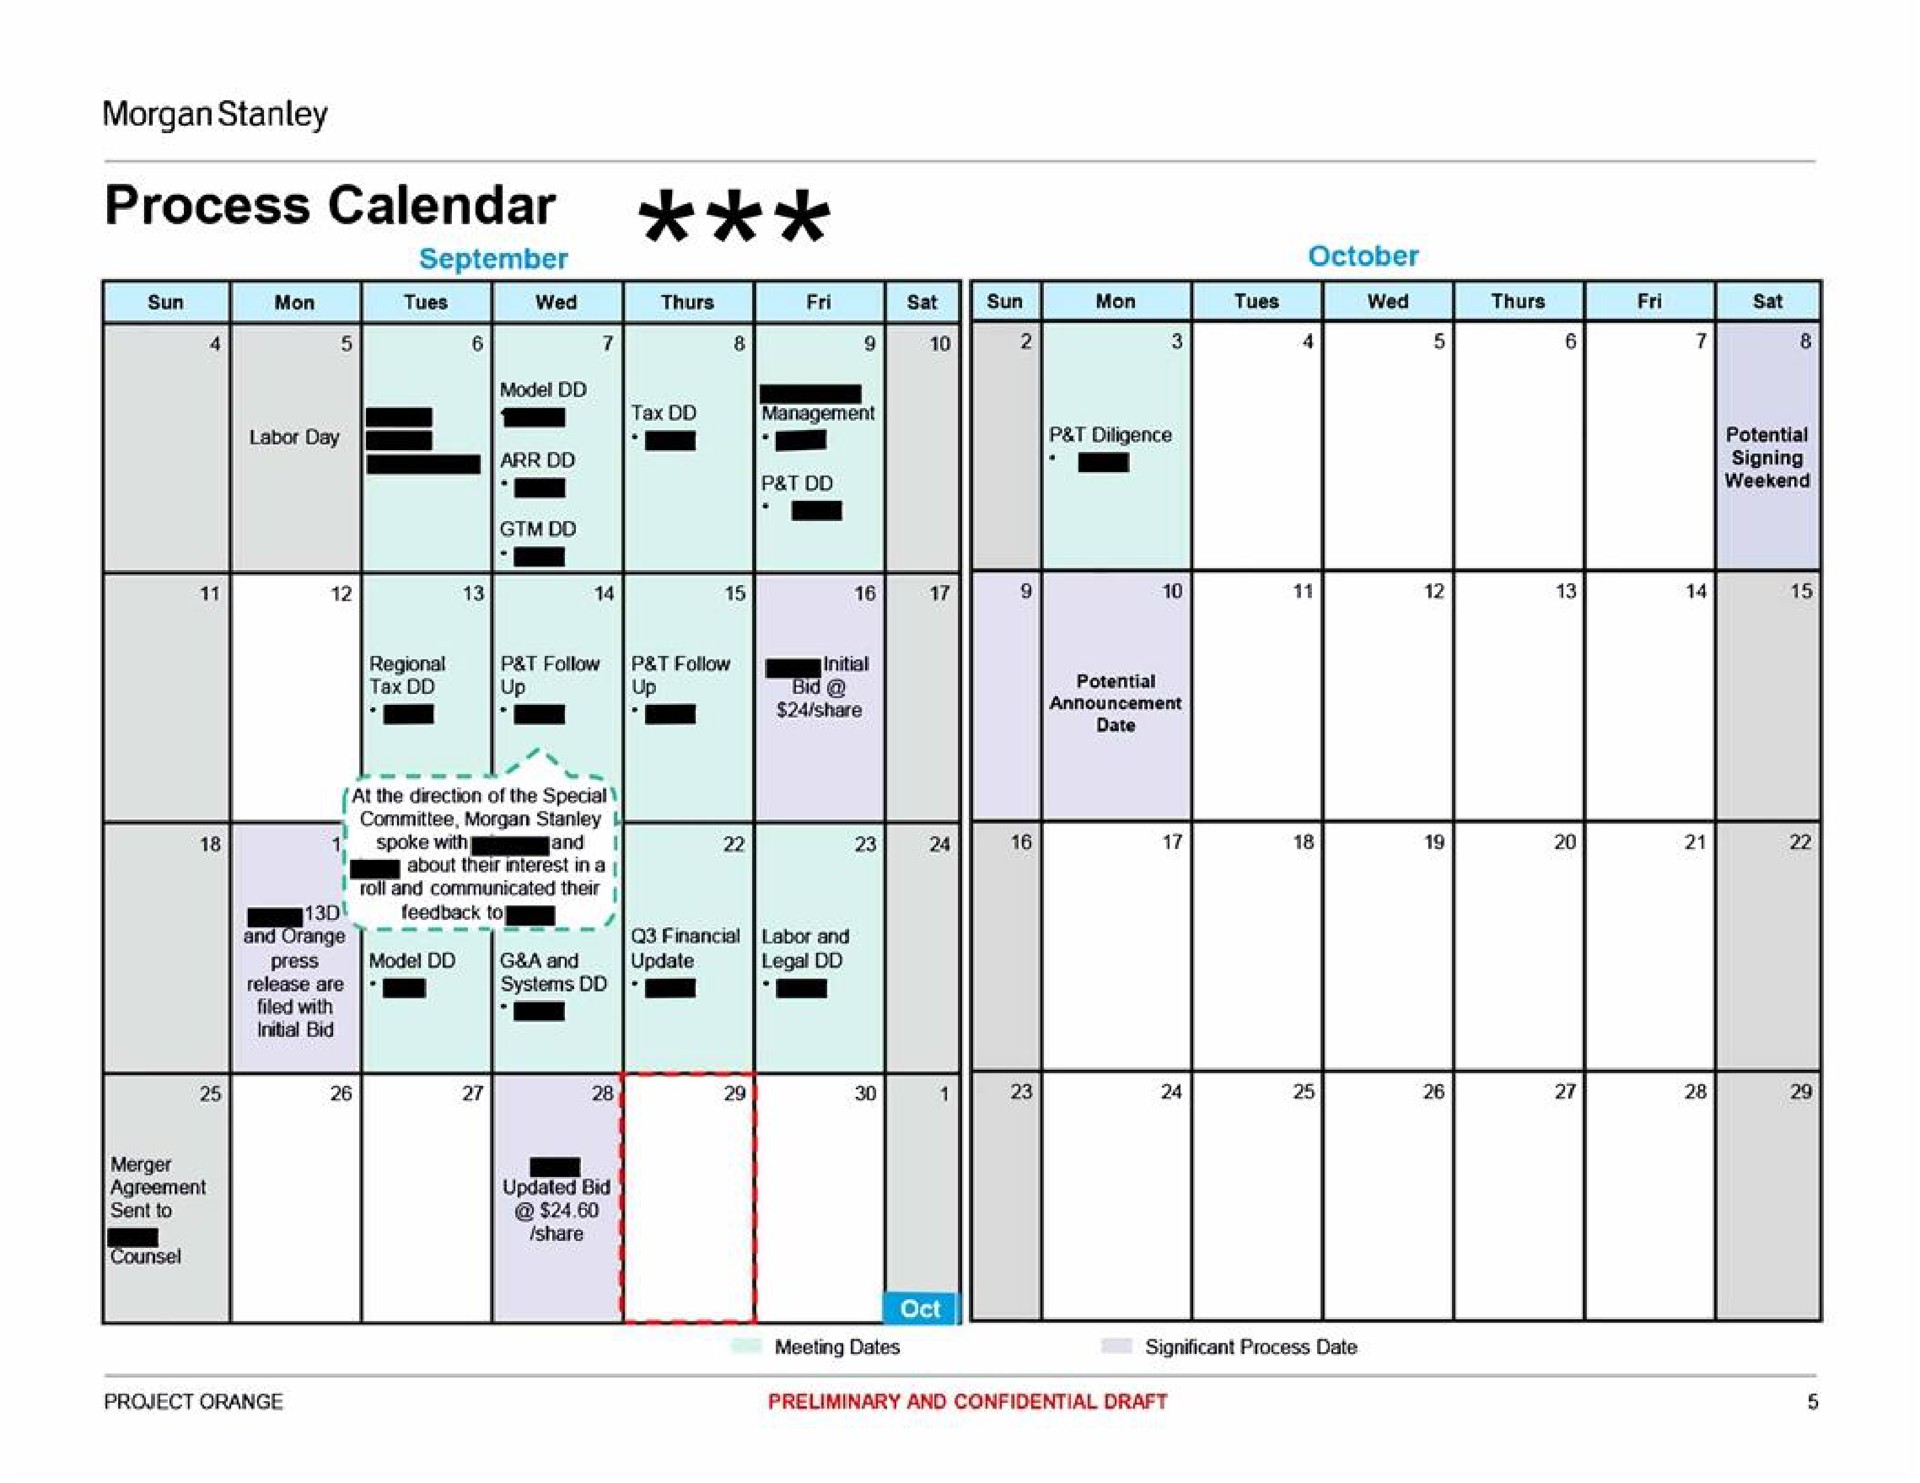 process calendar | Morgan Stanley